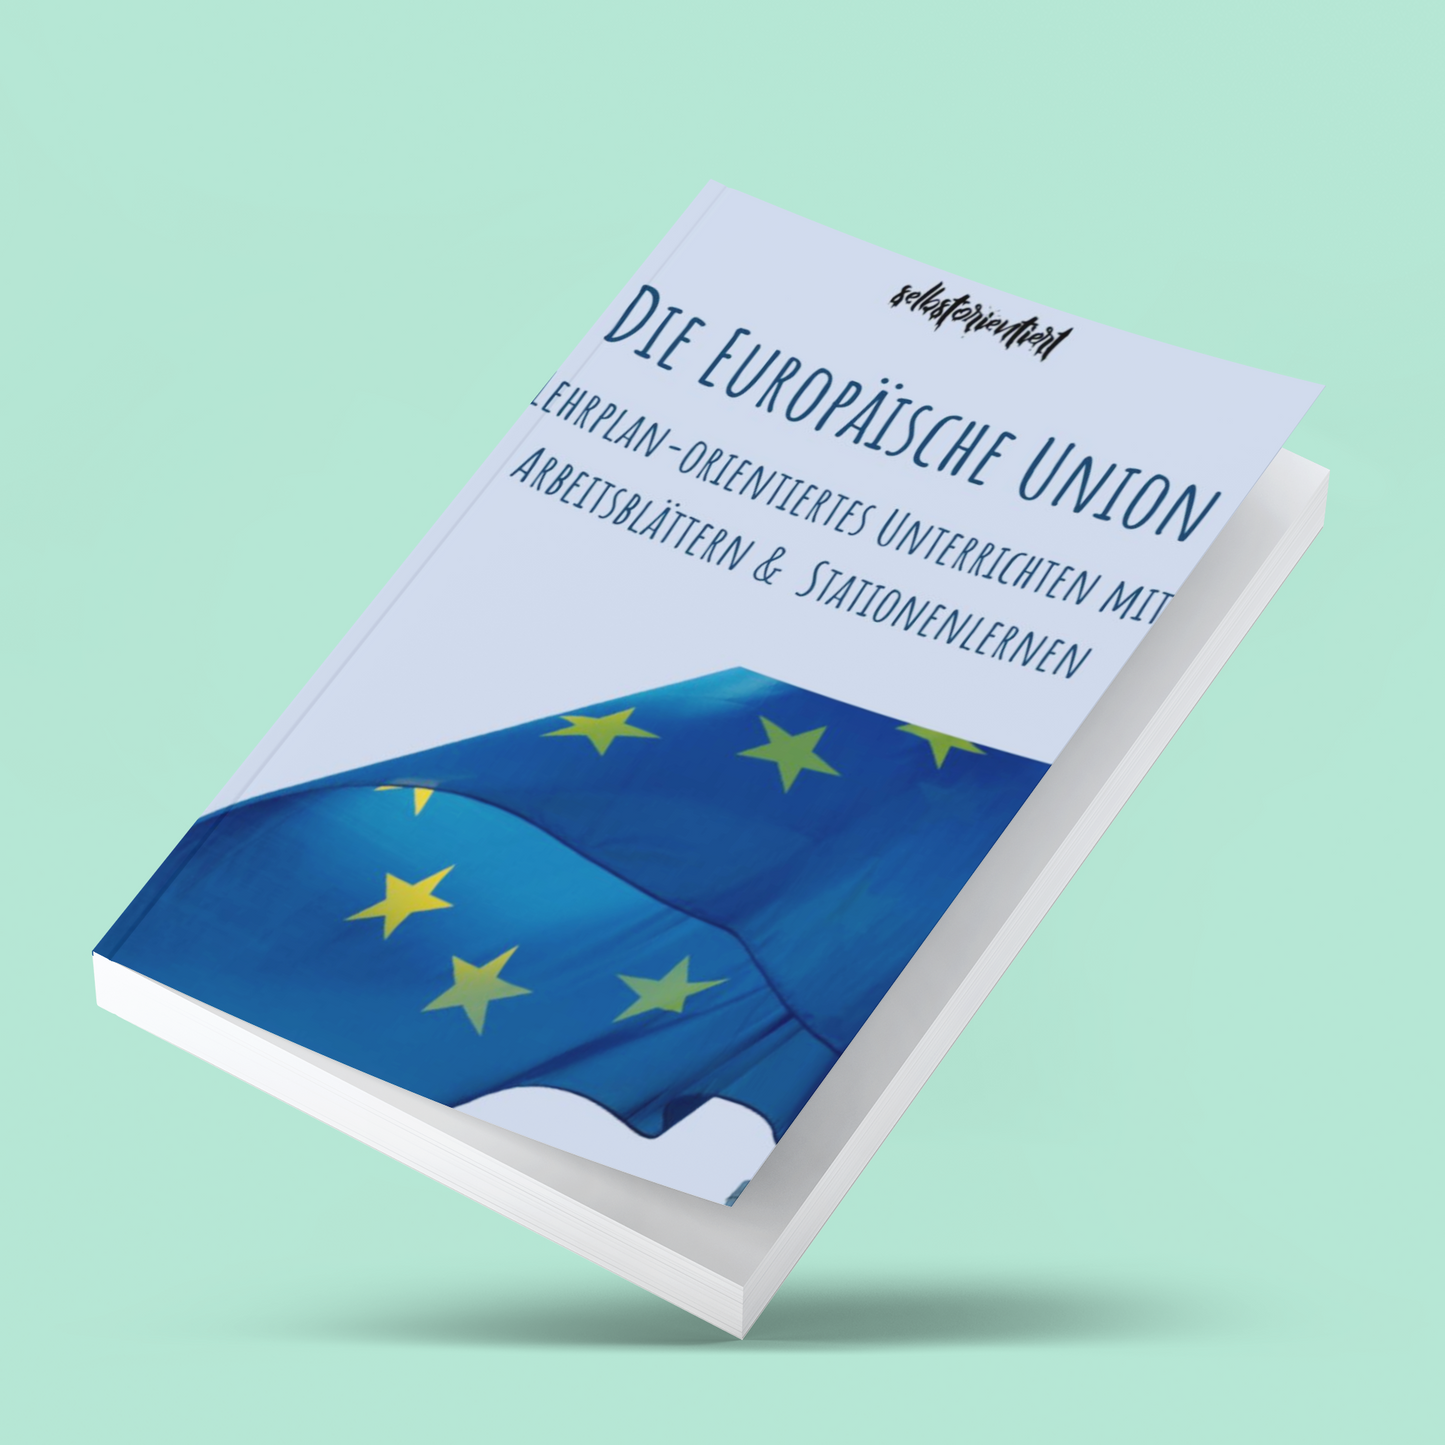 Softcover book: European Union - teaching like the curriculum!